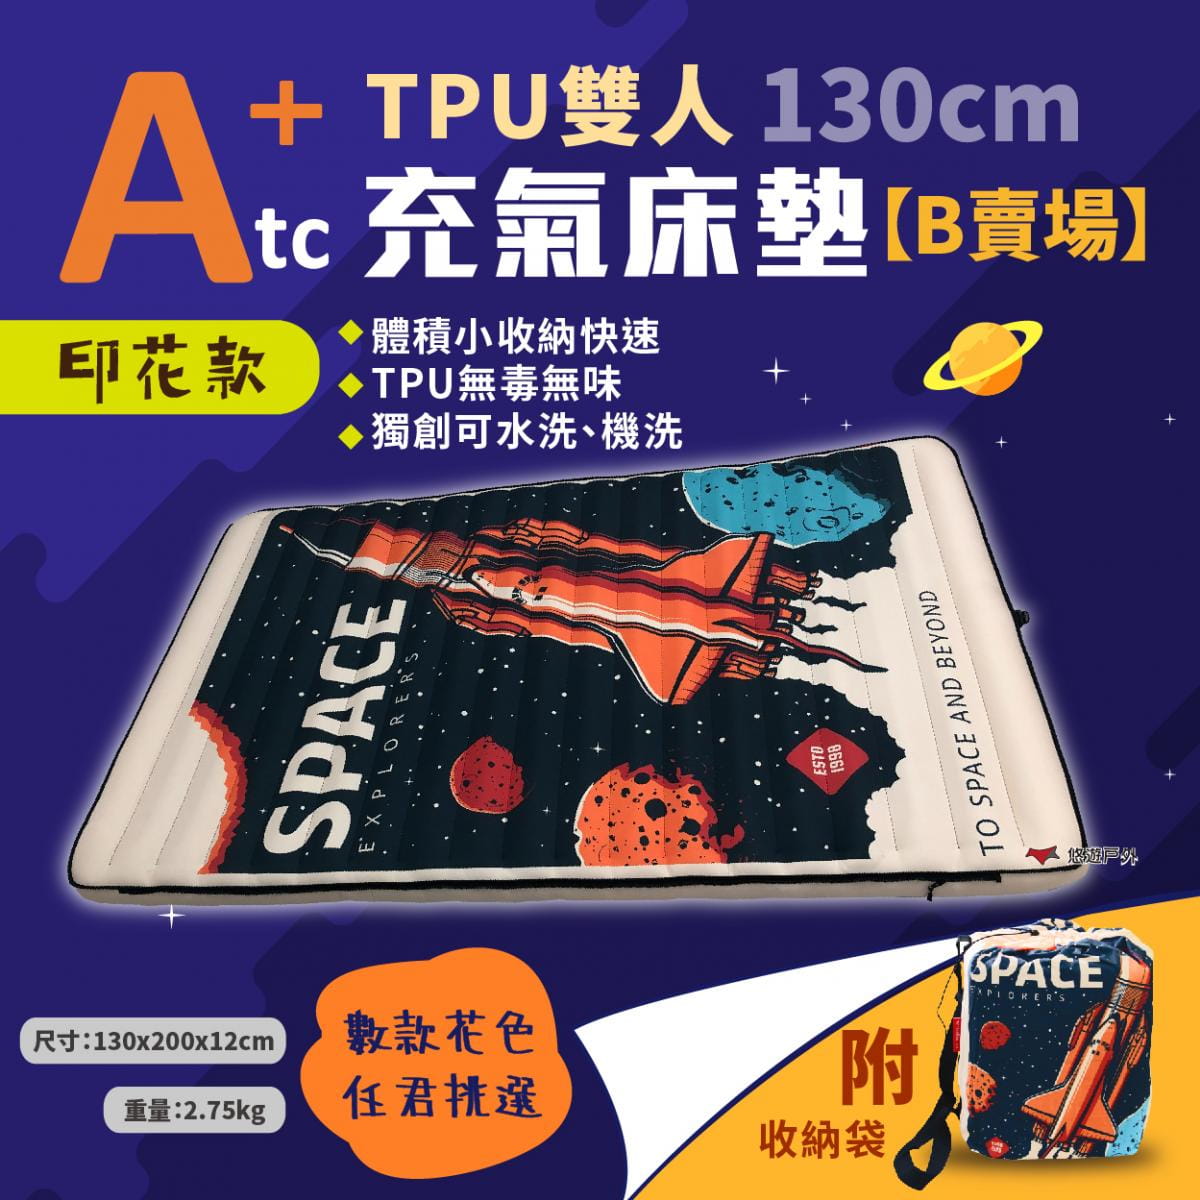 【ATC】TPU雙人組合充氣床墊 B賣場 悠遊戶外 1